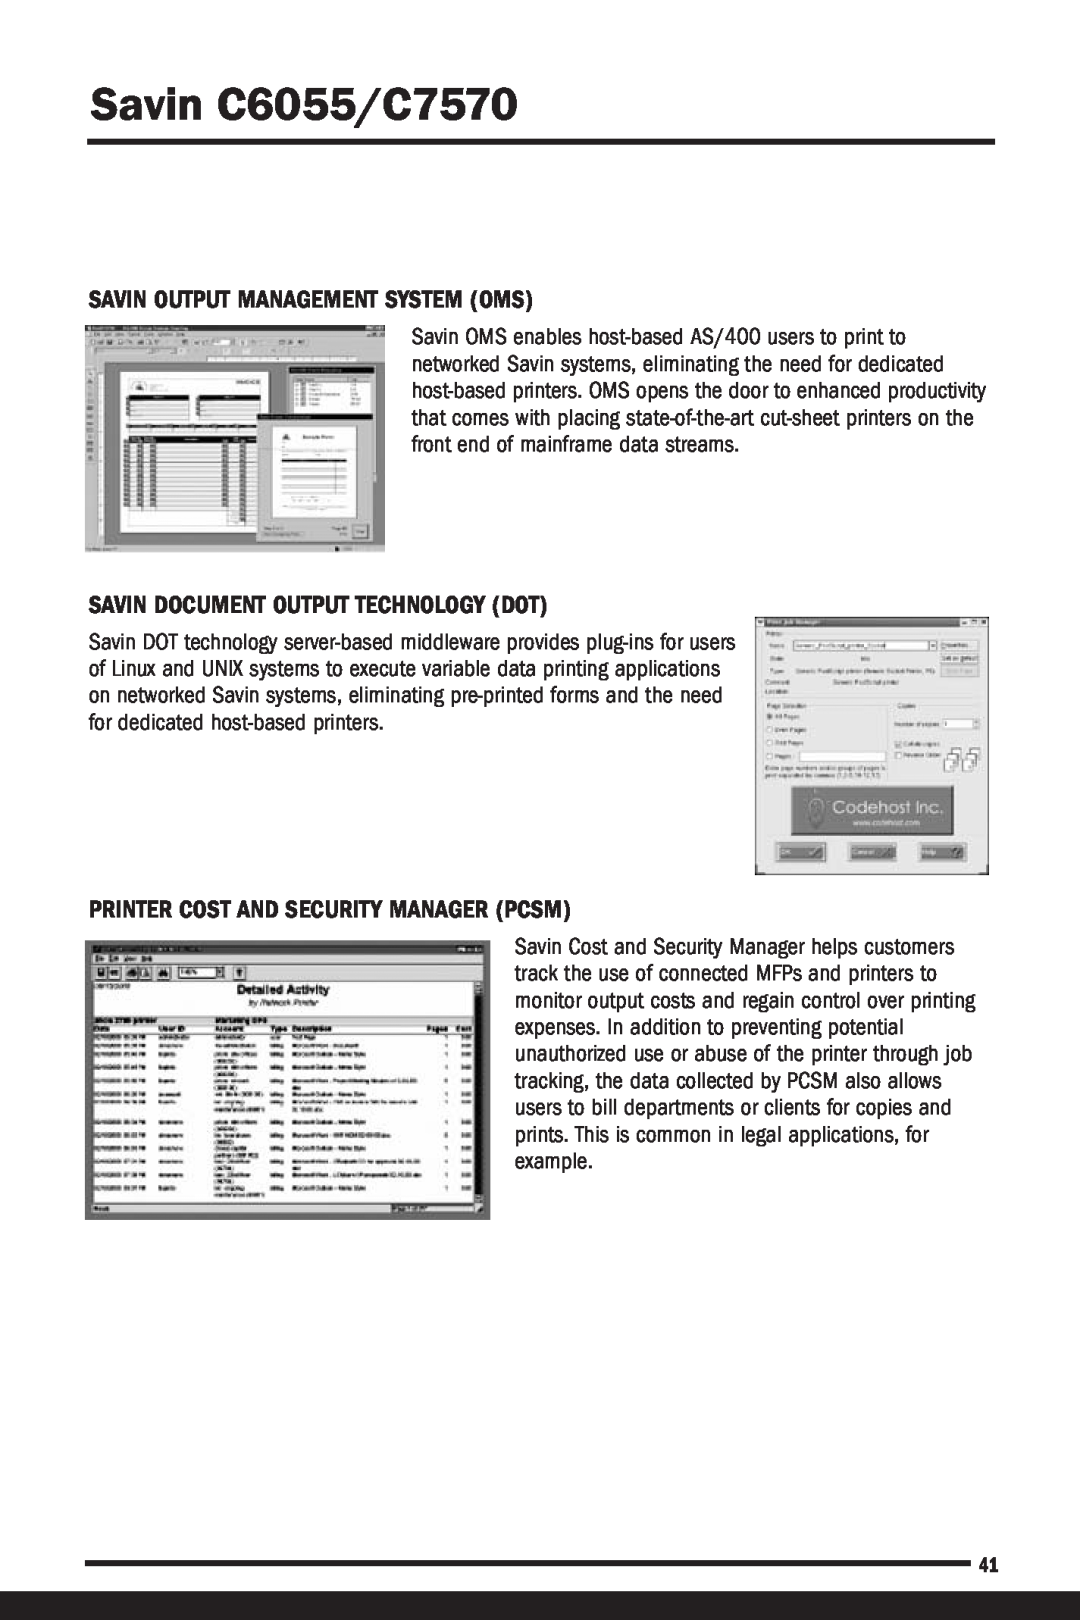 Savin manual Savin Output Management System Oms, Savin Document Output Technology Dot, Savin C6055/C7570 